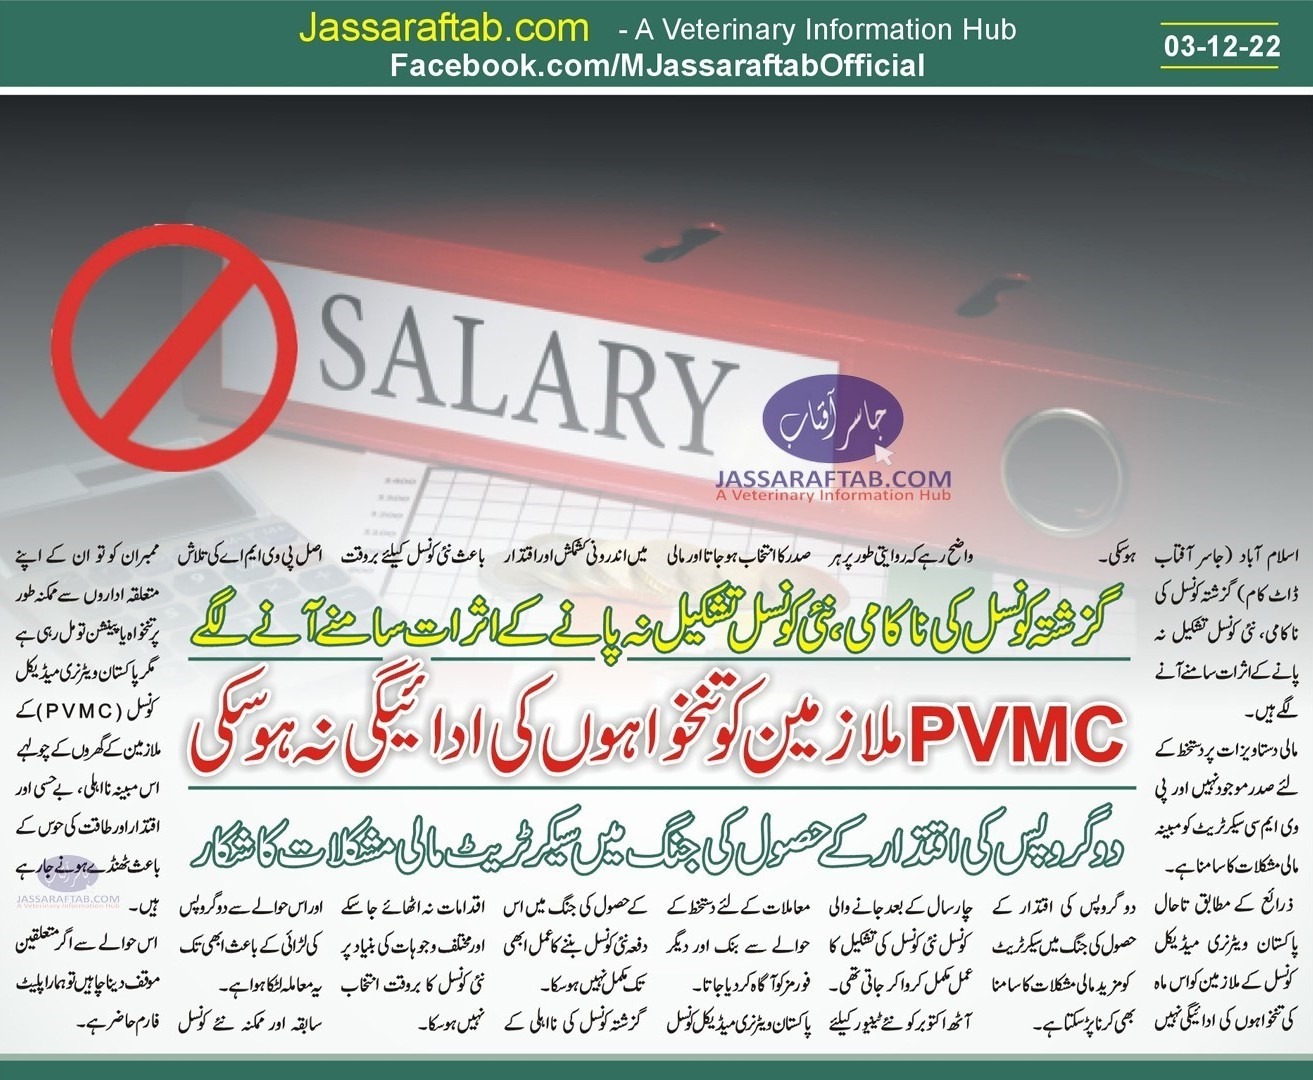 PVMC Financial Issues